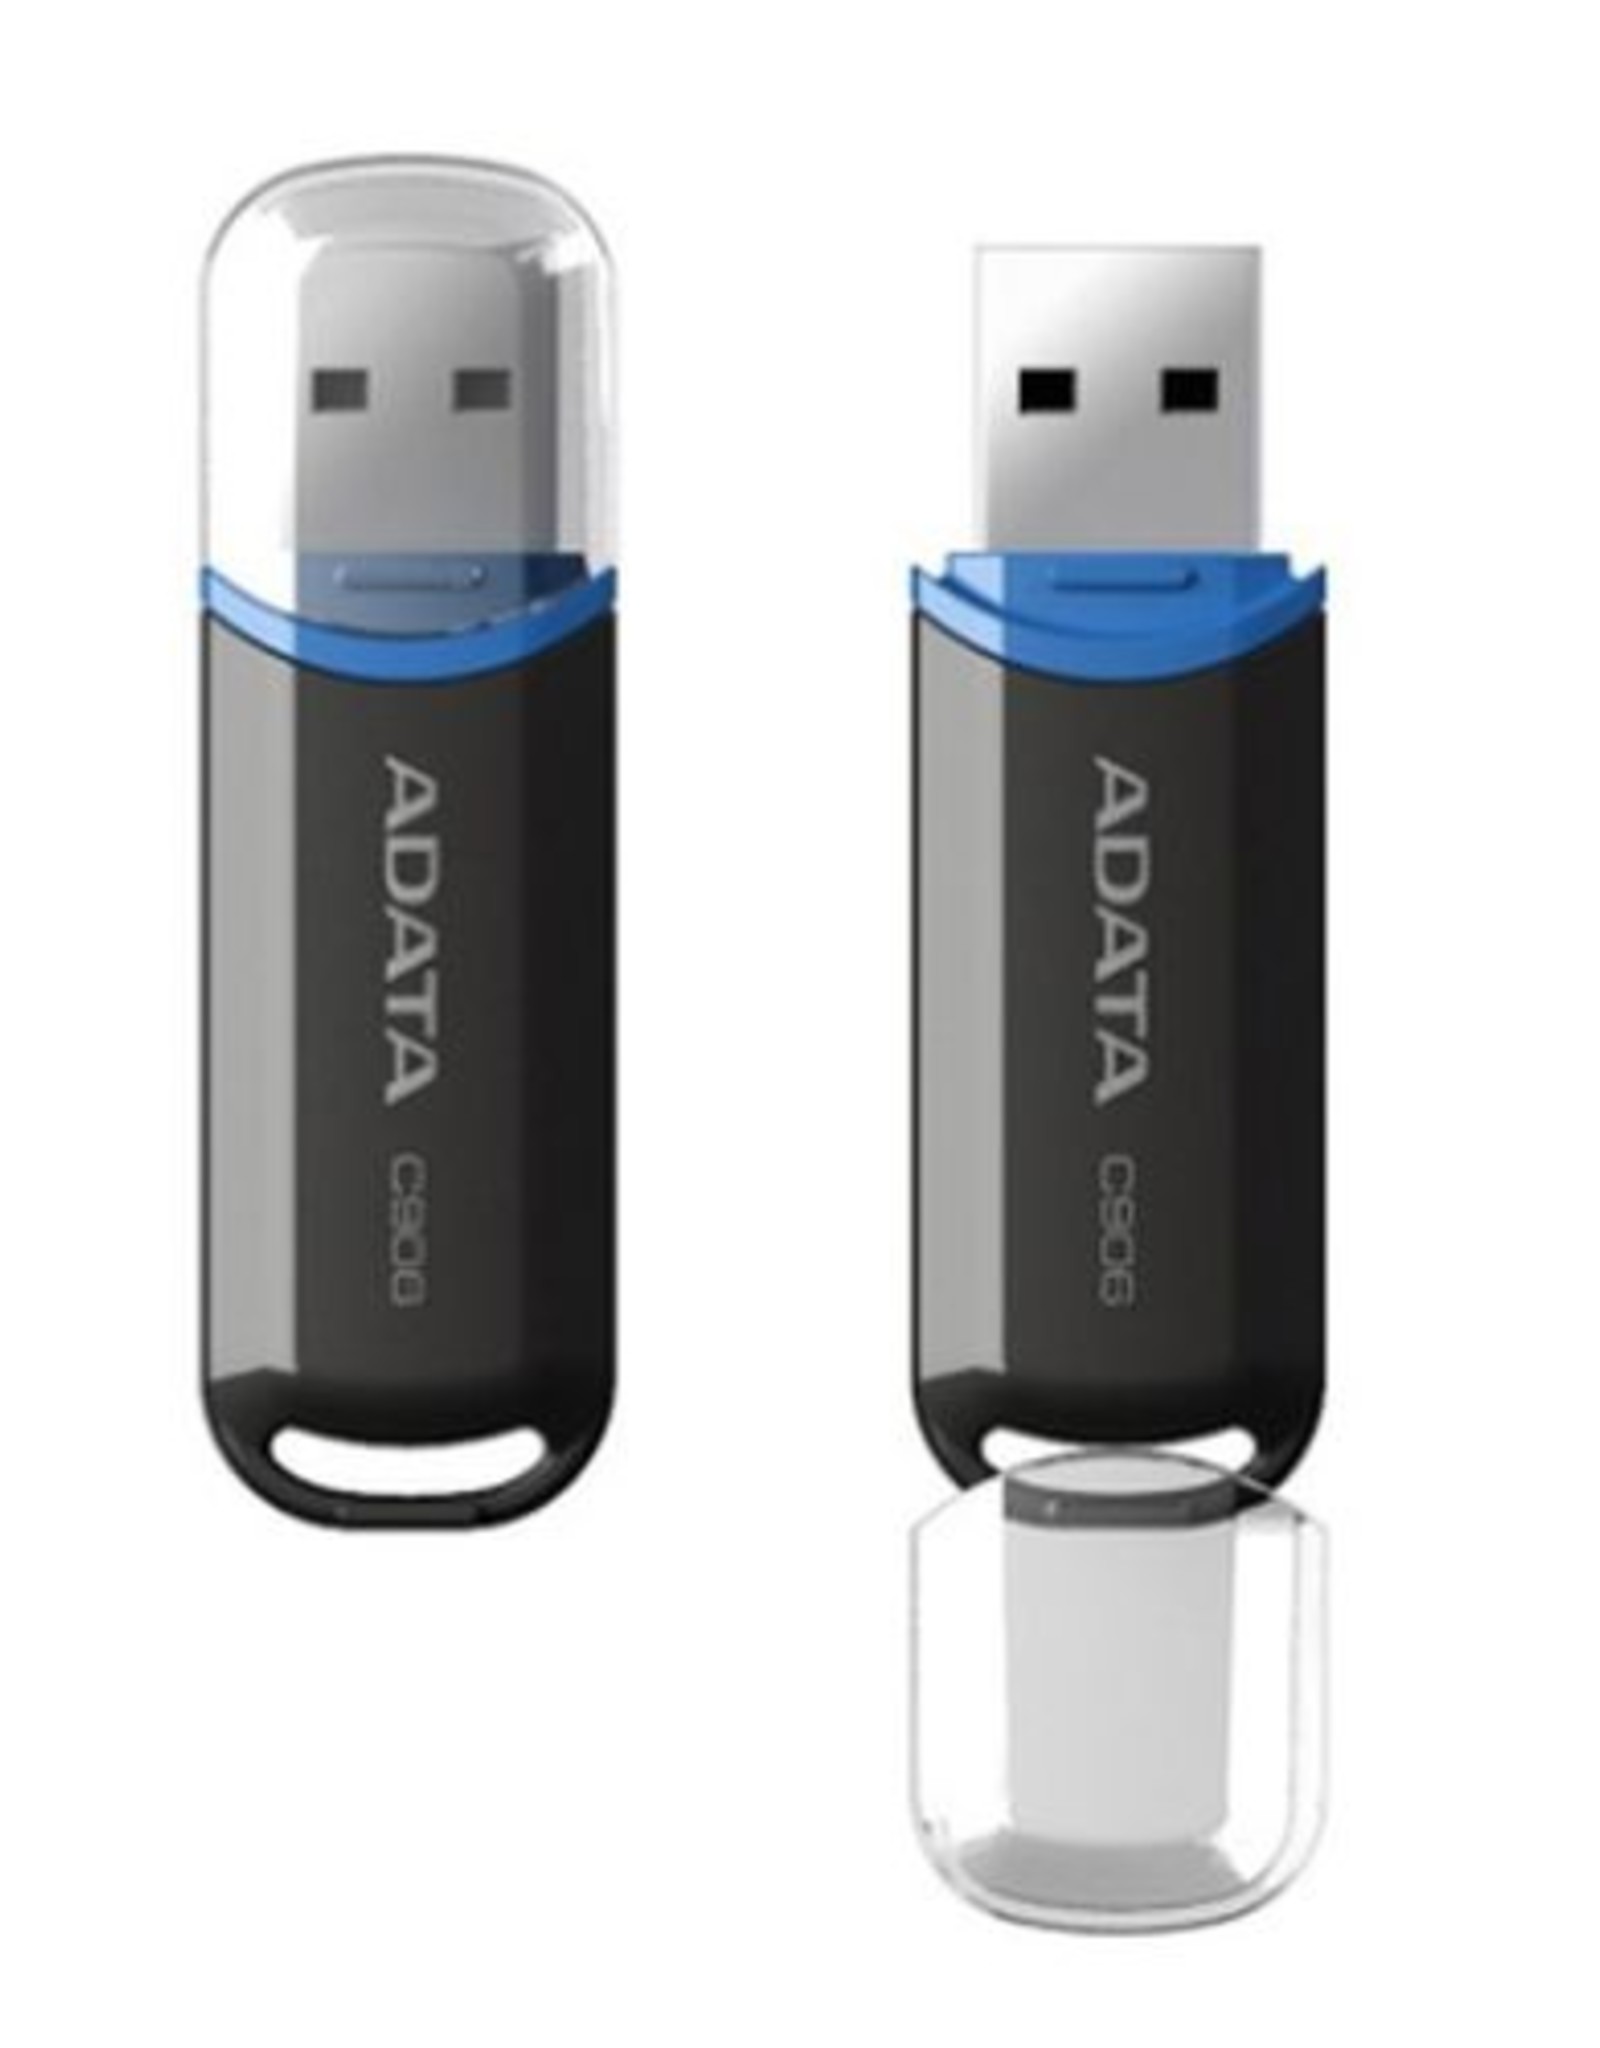 ADATA ADATA USB2.0 MEMORY PEN (C906), 16GB, CAPPED,COMPACT, BLACK